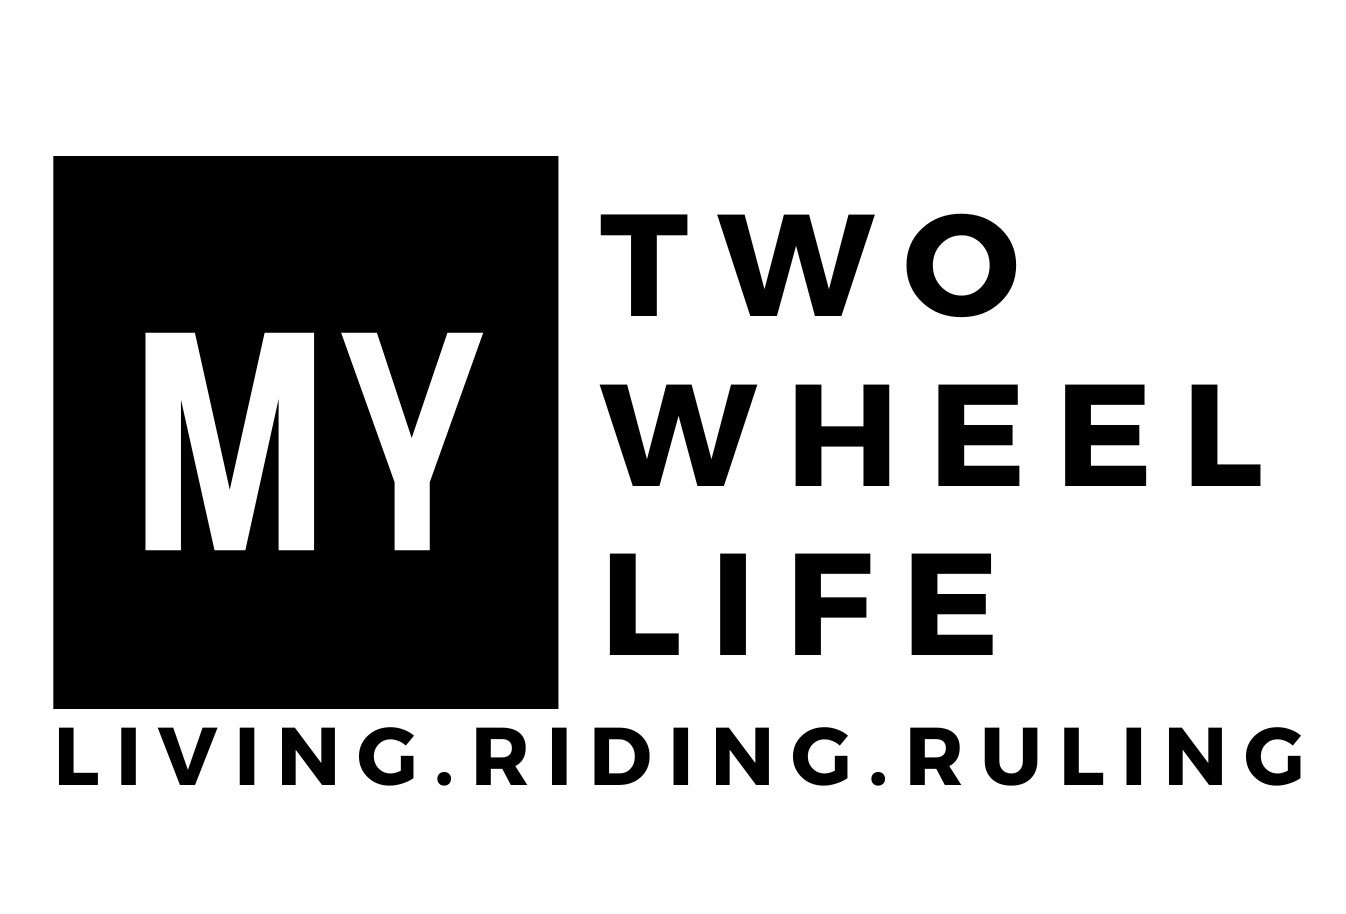 My Two Wheel Life